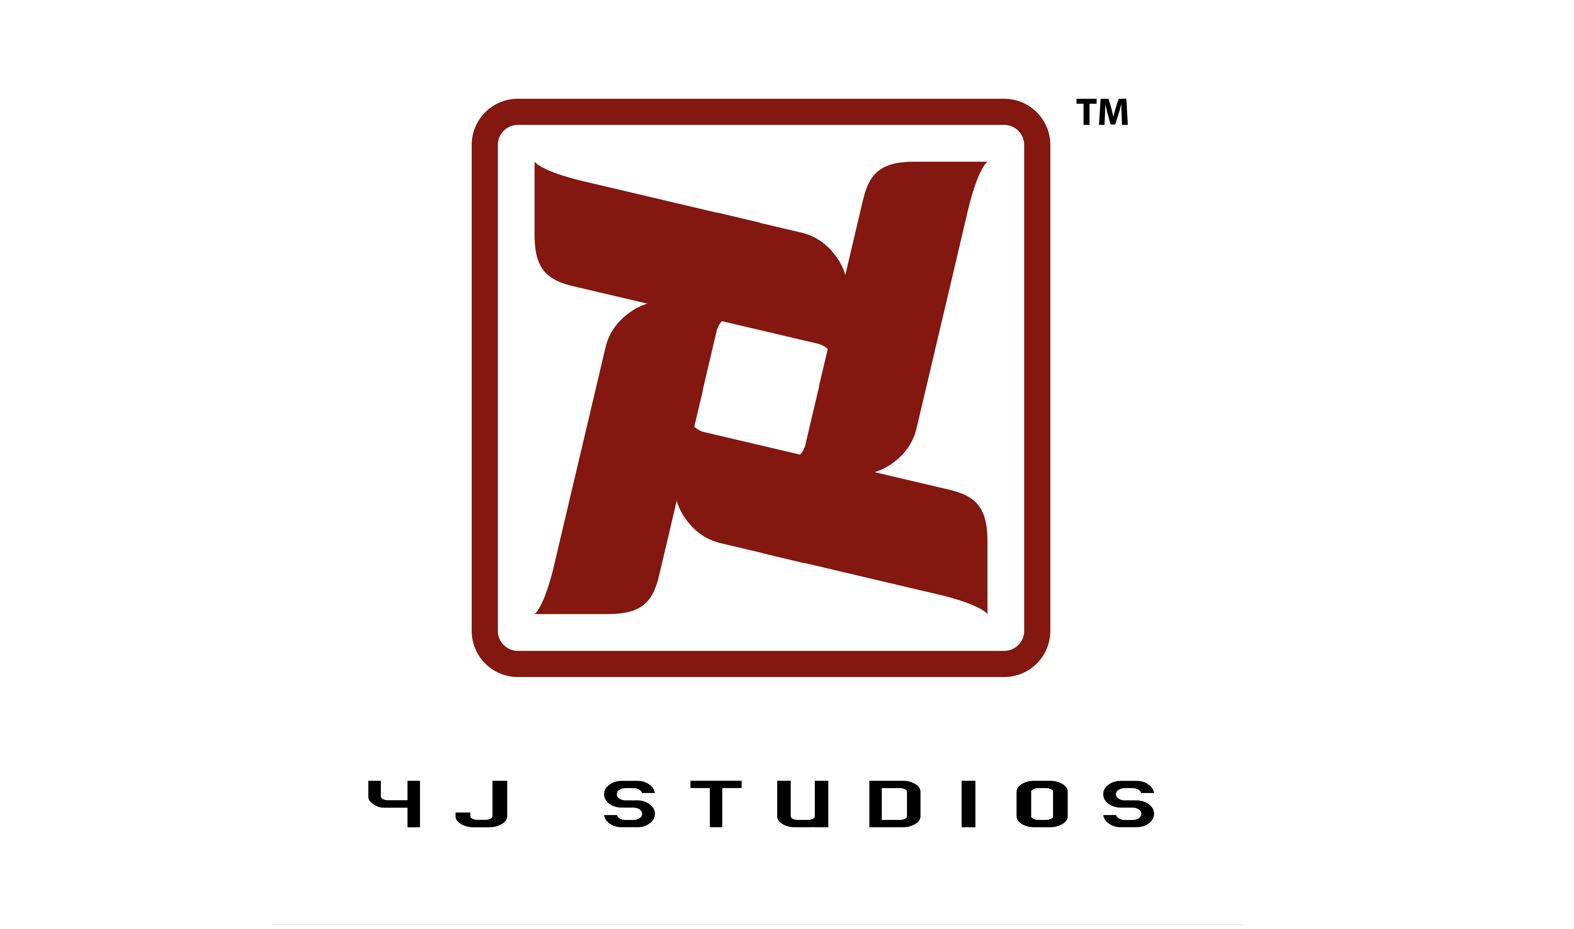 4J Studios announces move into publishing GamesIndustry.biz